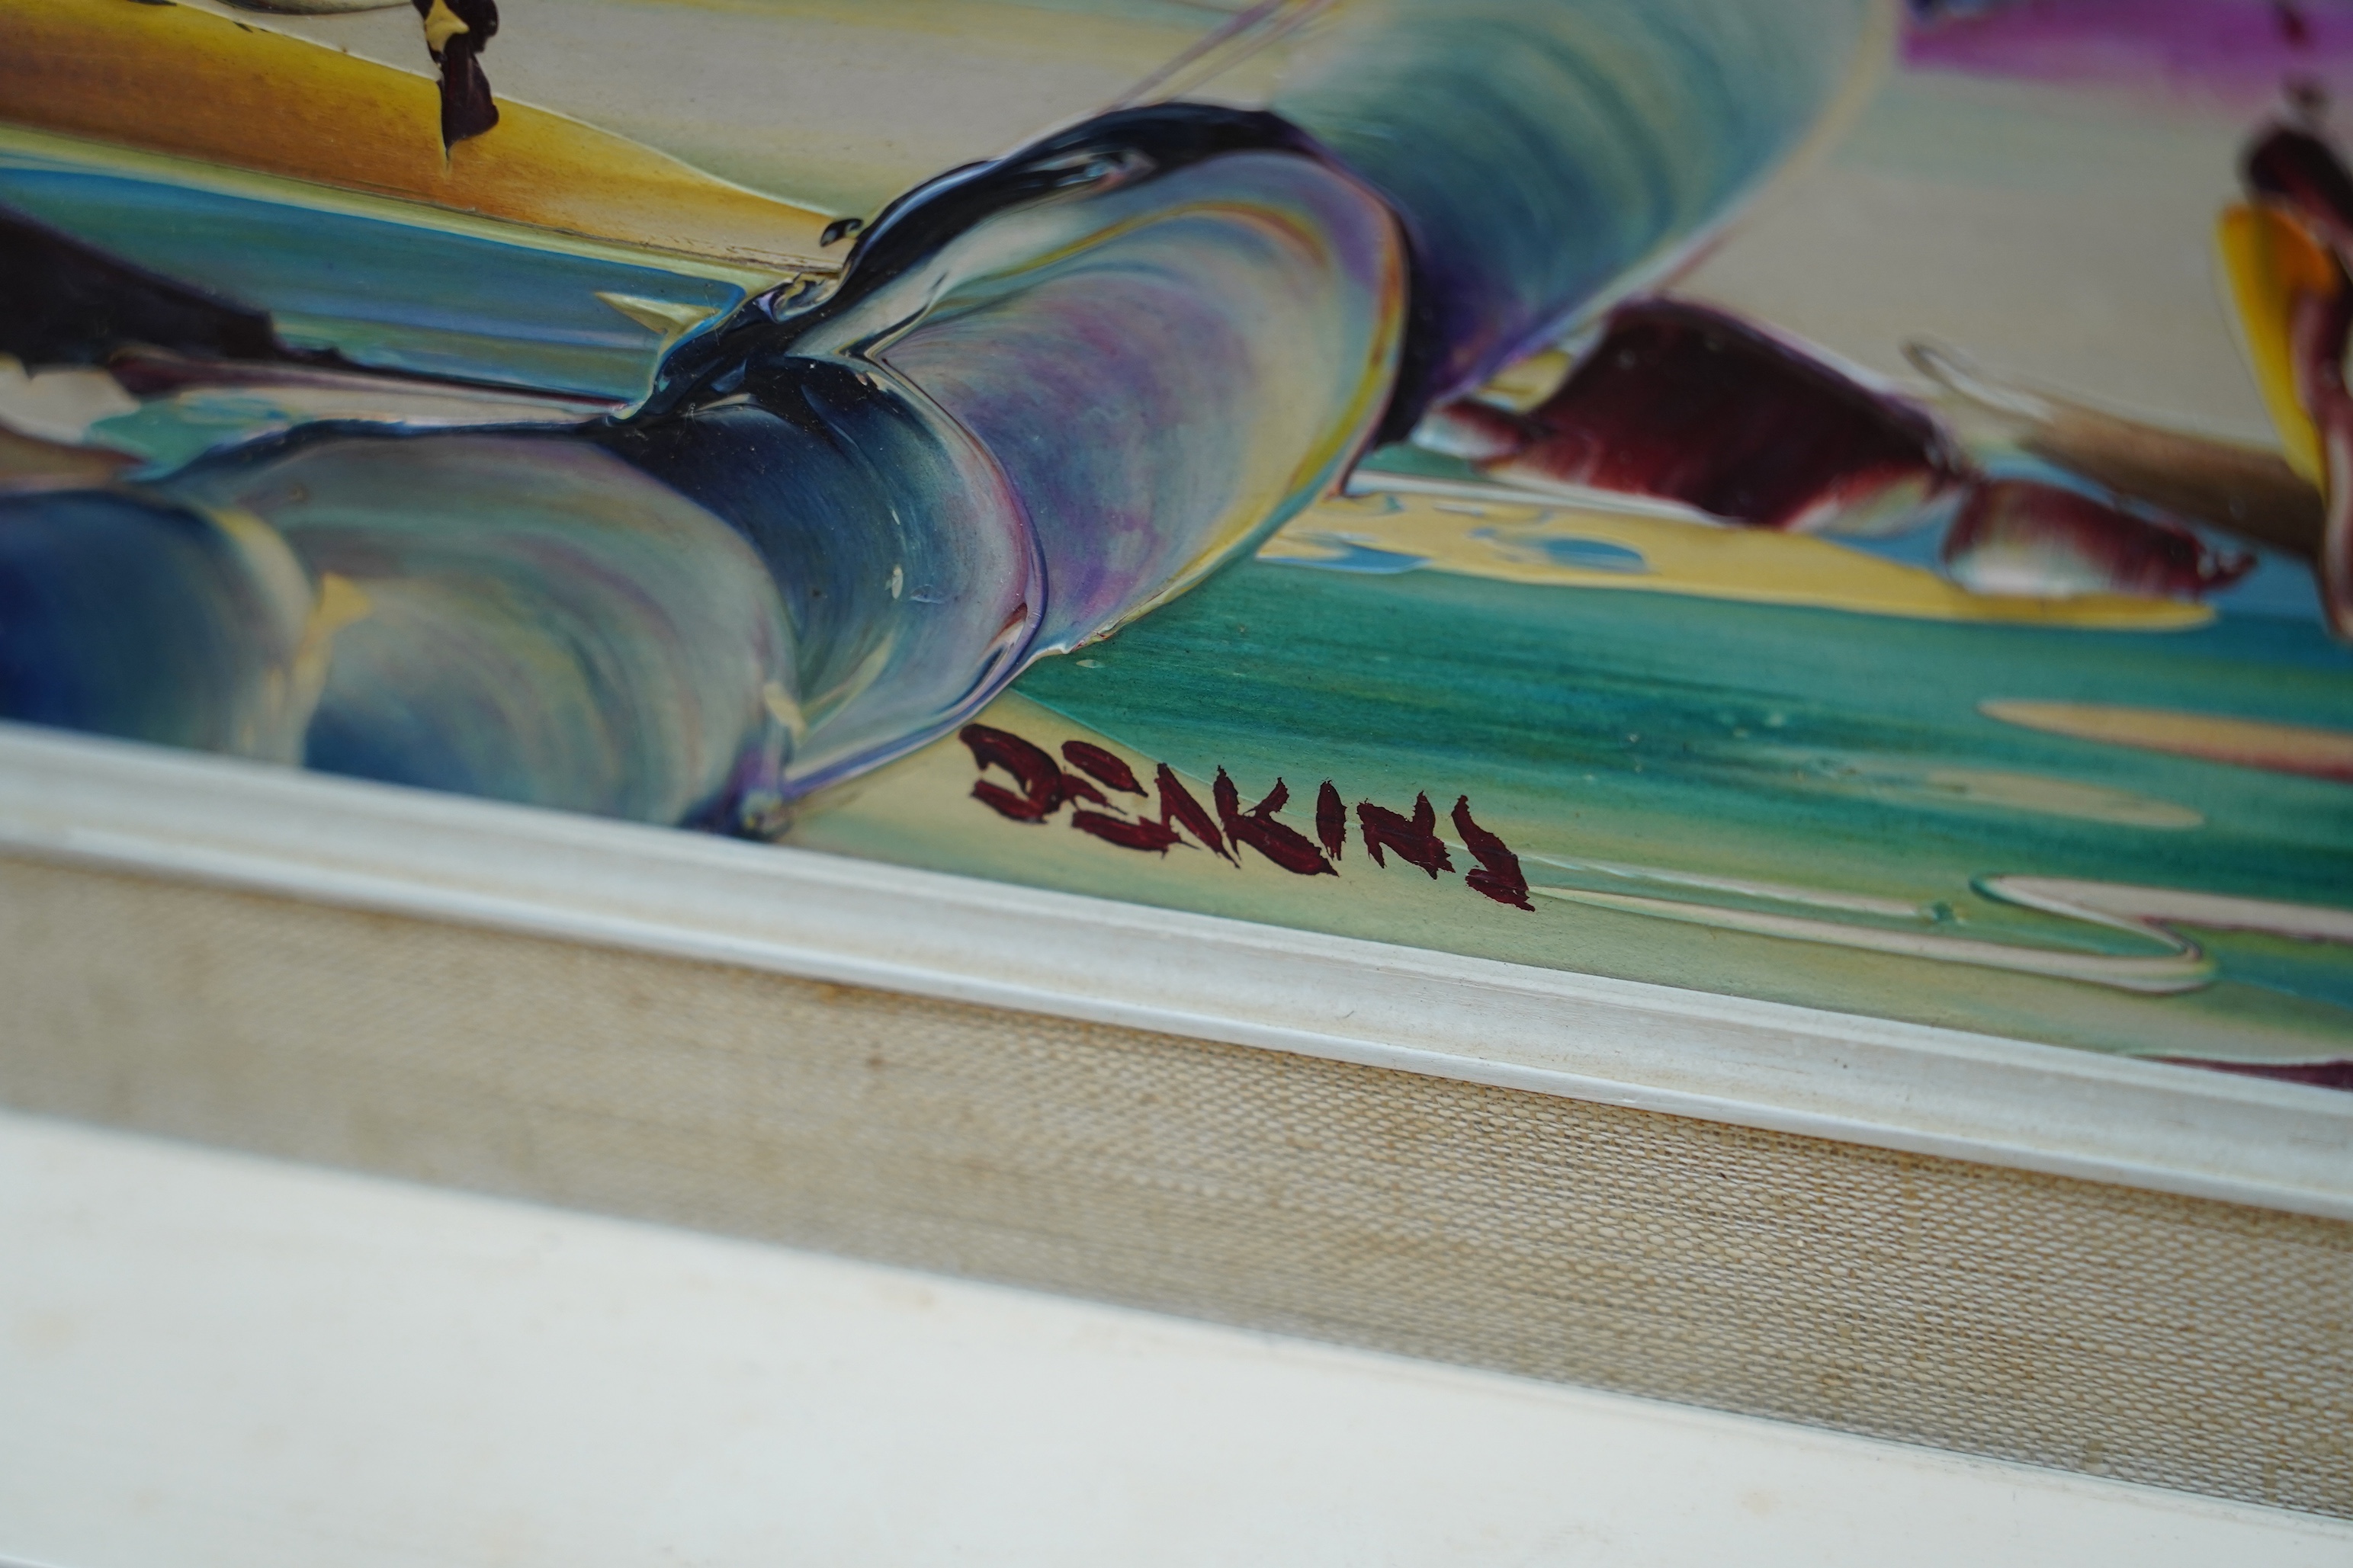 George Richard Deakins (1911-1982), impasto oil on board, Beach scene with figures, signed, 29 x 82cm